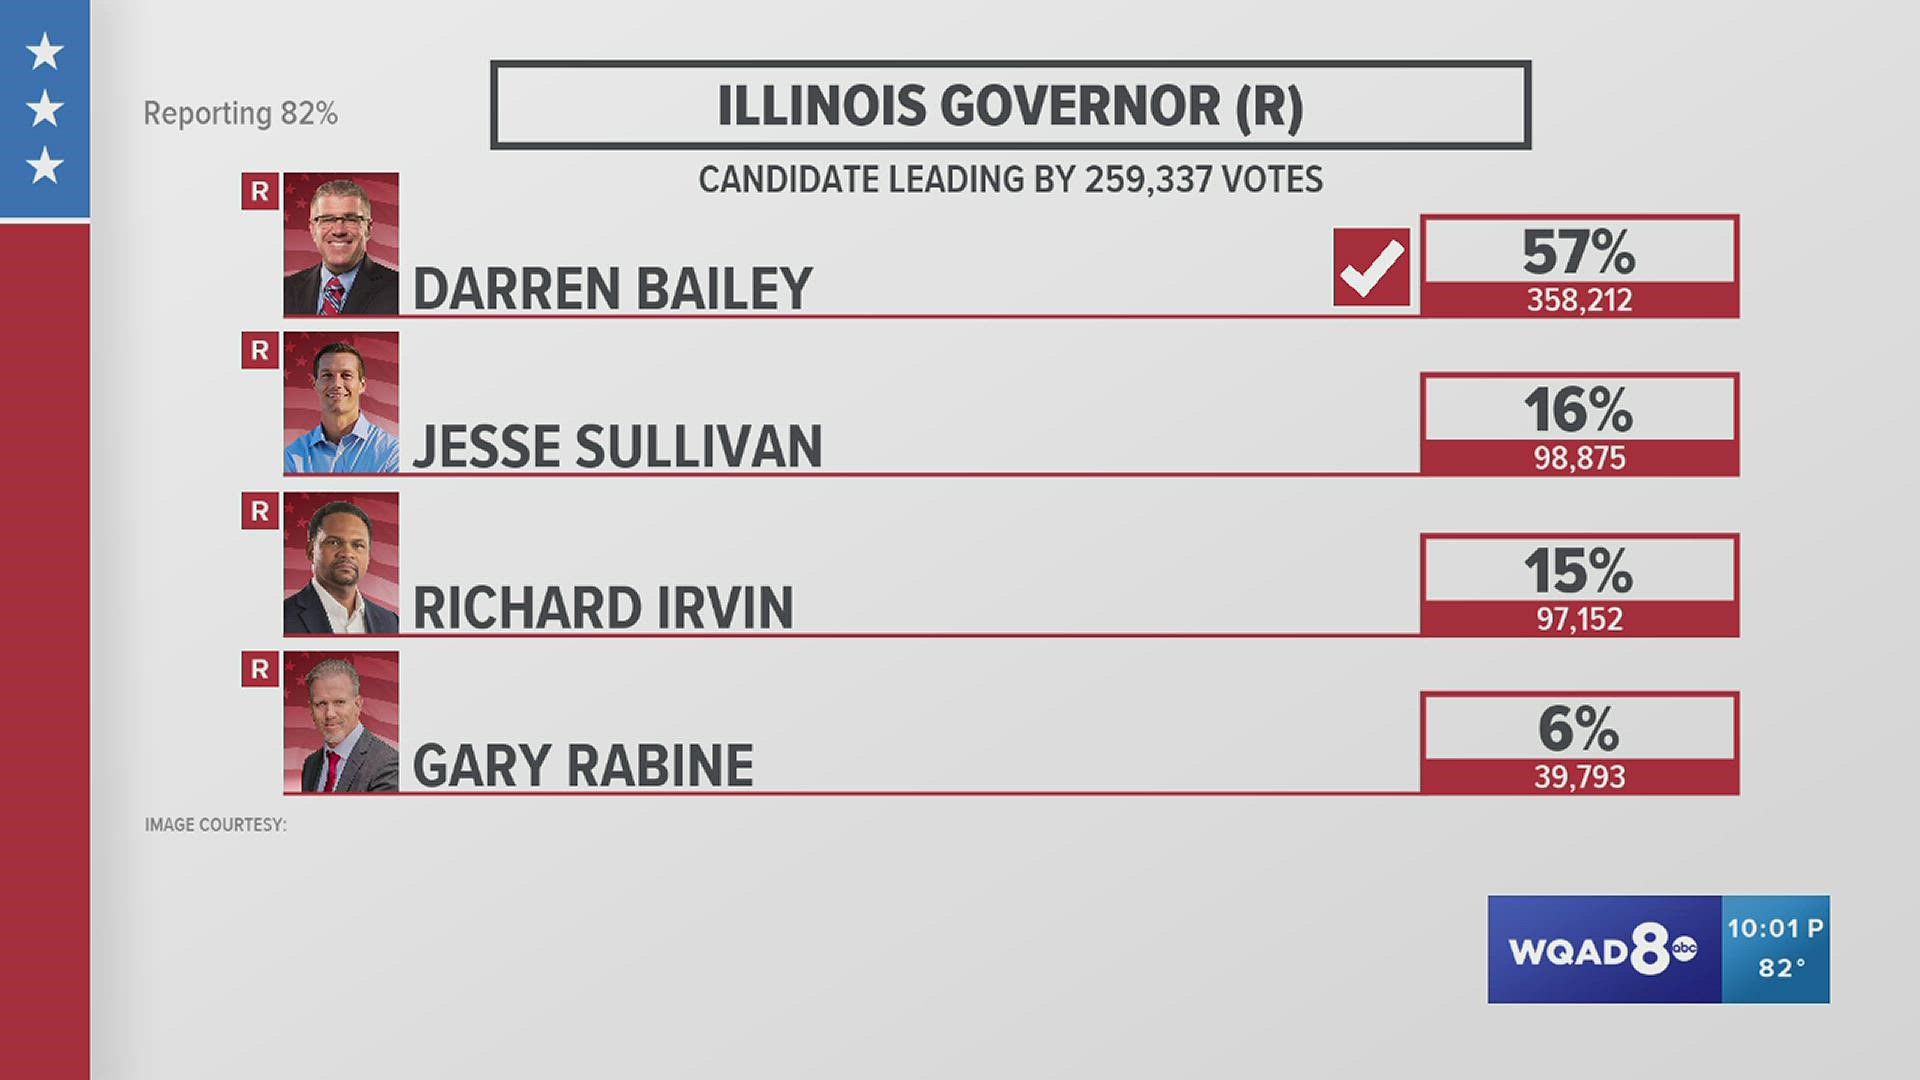 Trump-endorsed Republican State Senator Darren Bailey will compete against the incumbent Democratic Governor J.B. Pritzker in the general election this November.